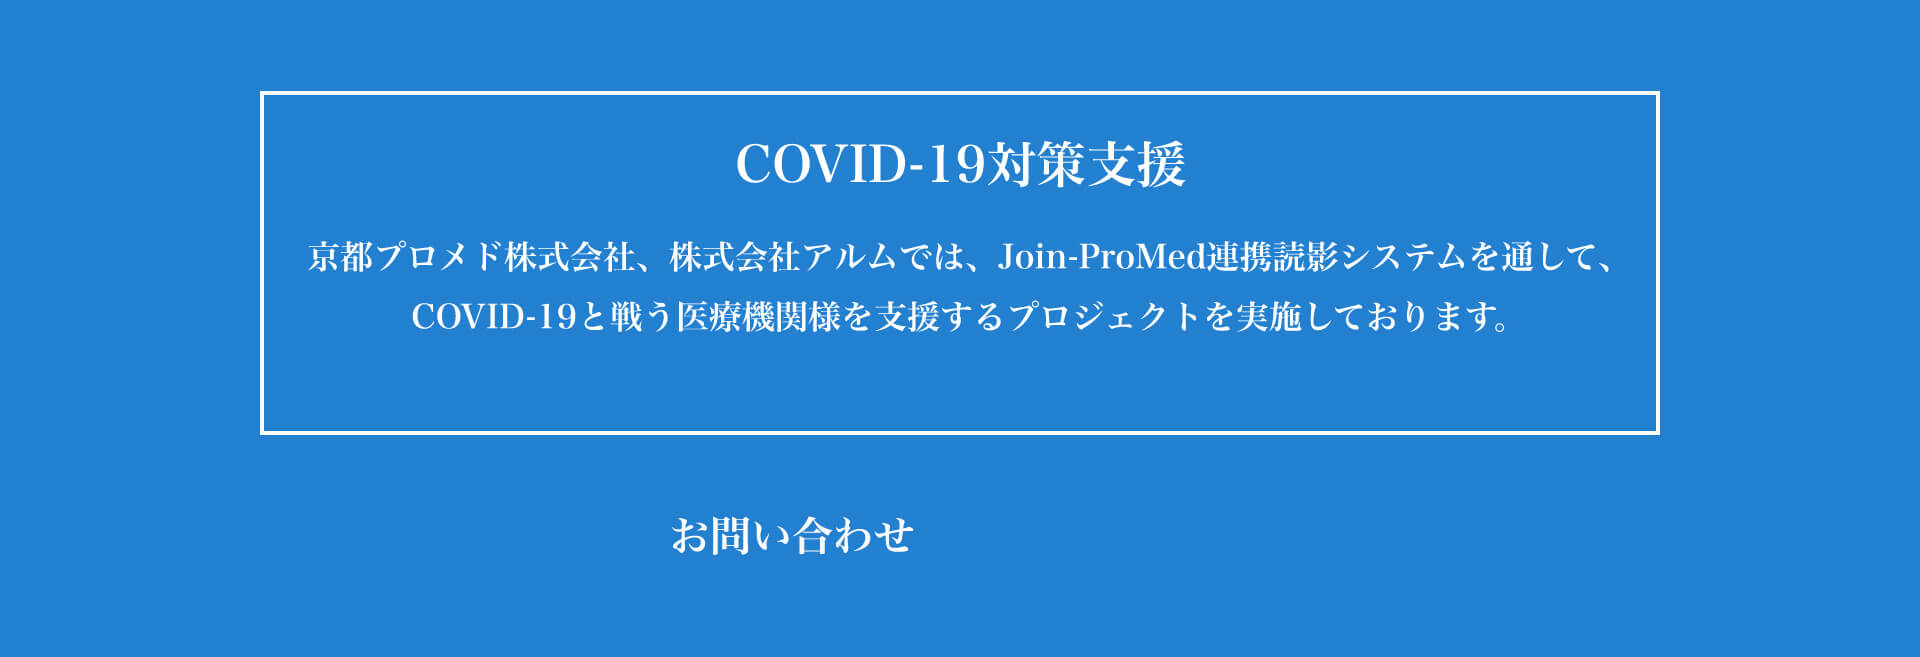 COVID-19対策支援